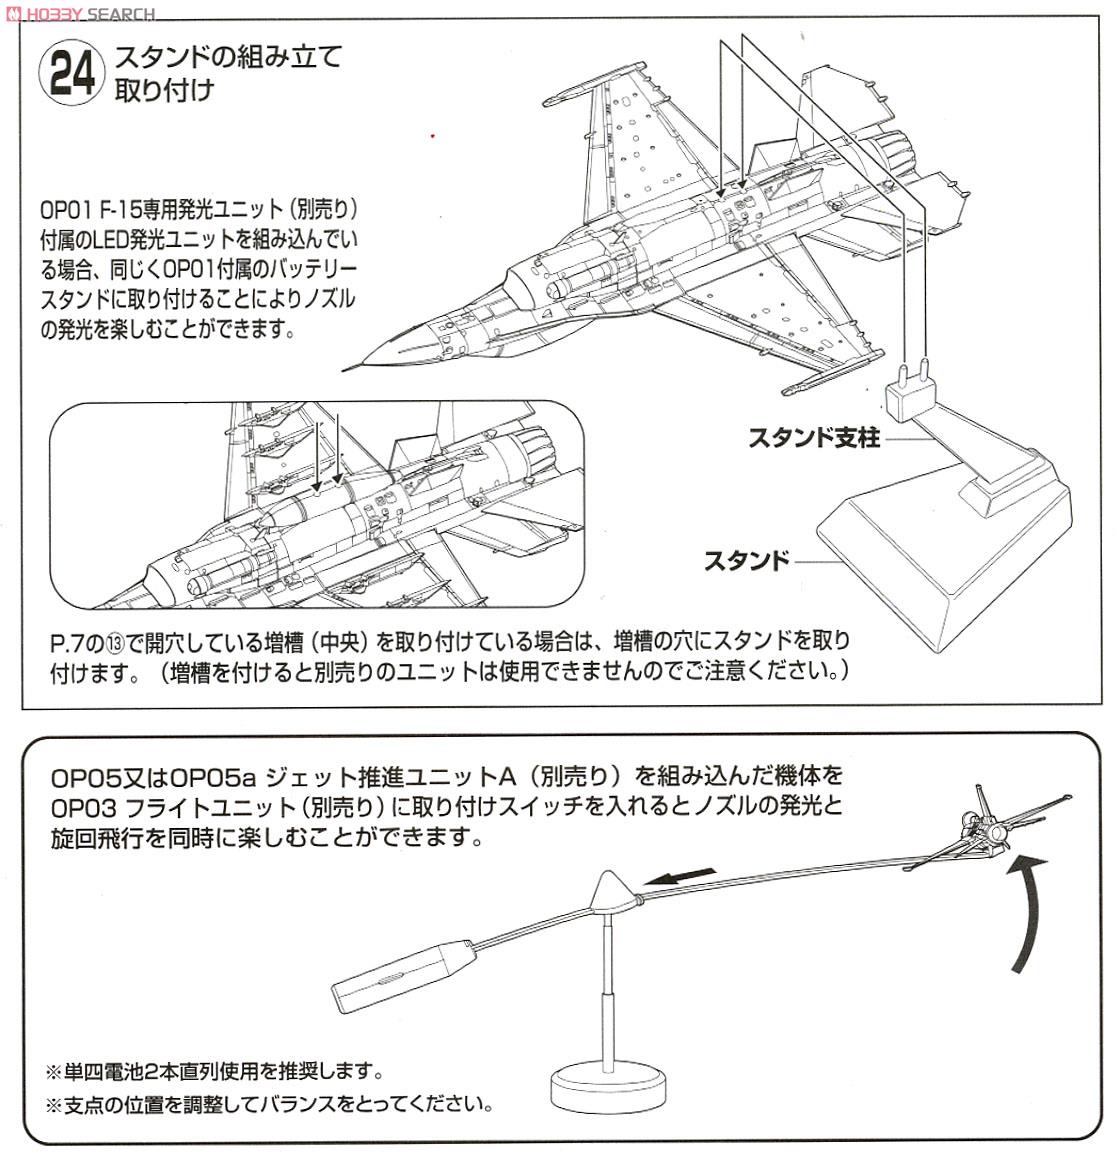 航空自衛隊 XF-2B 飛行開発実験団(岐阜) 試作4号機 63-8102 (プラモデル) 設計図6